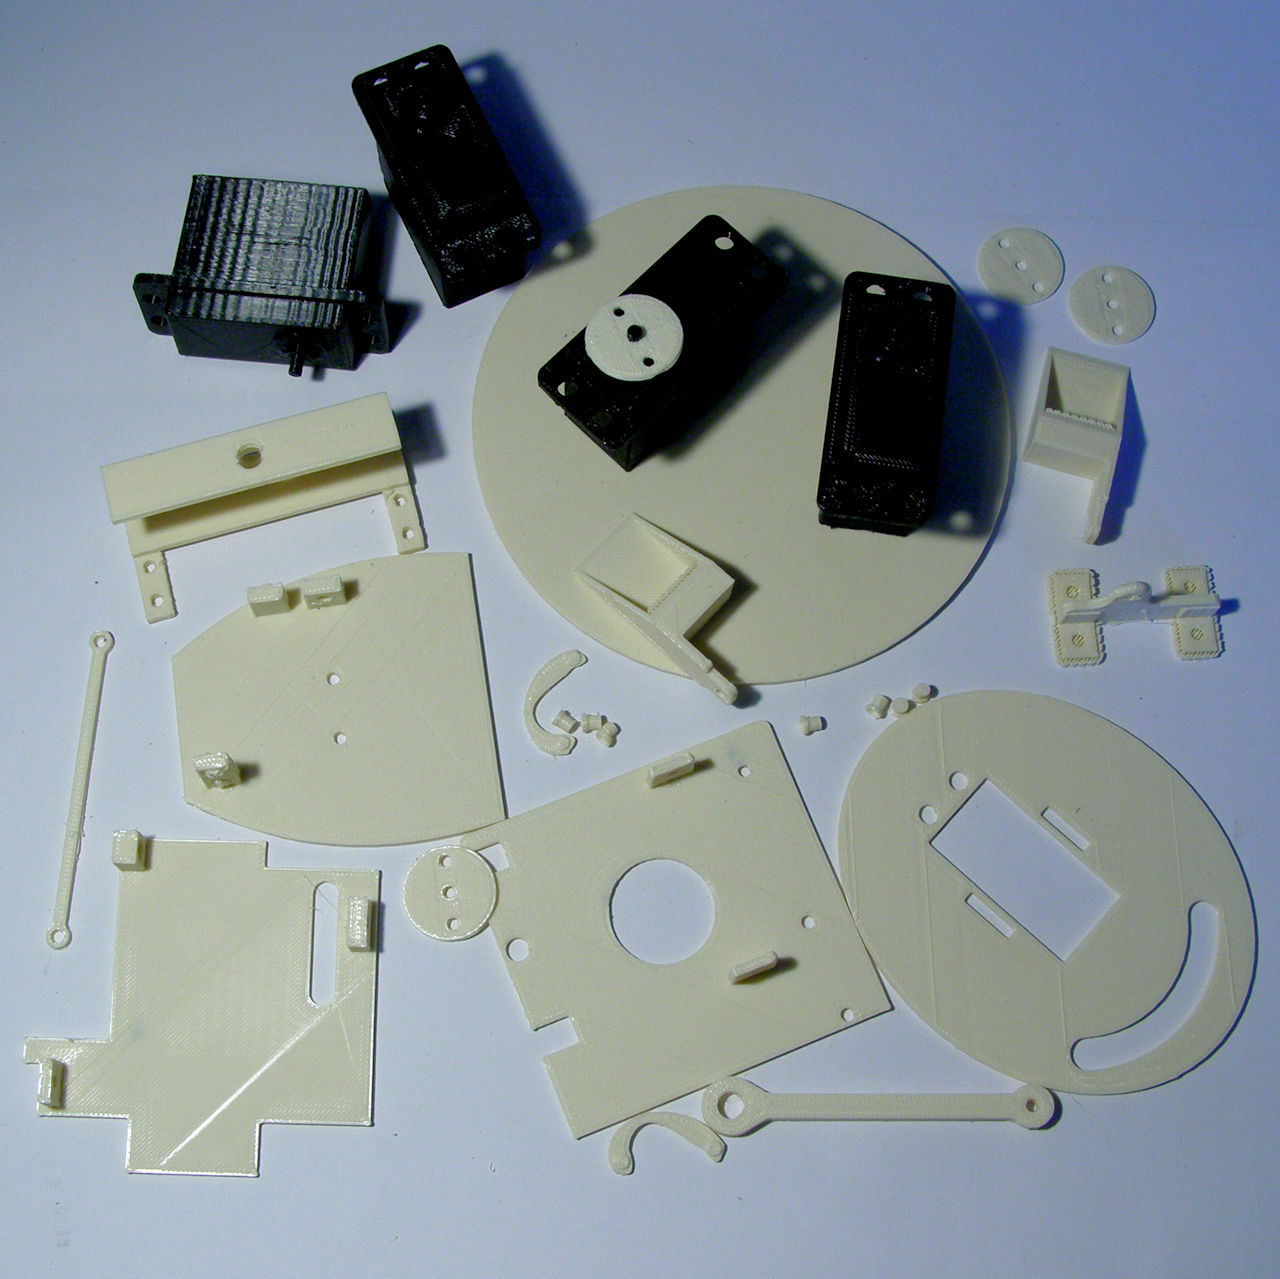 robotic arm kit image